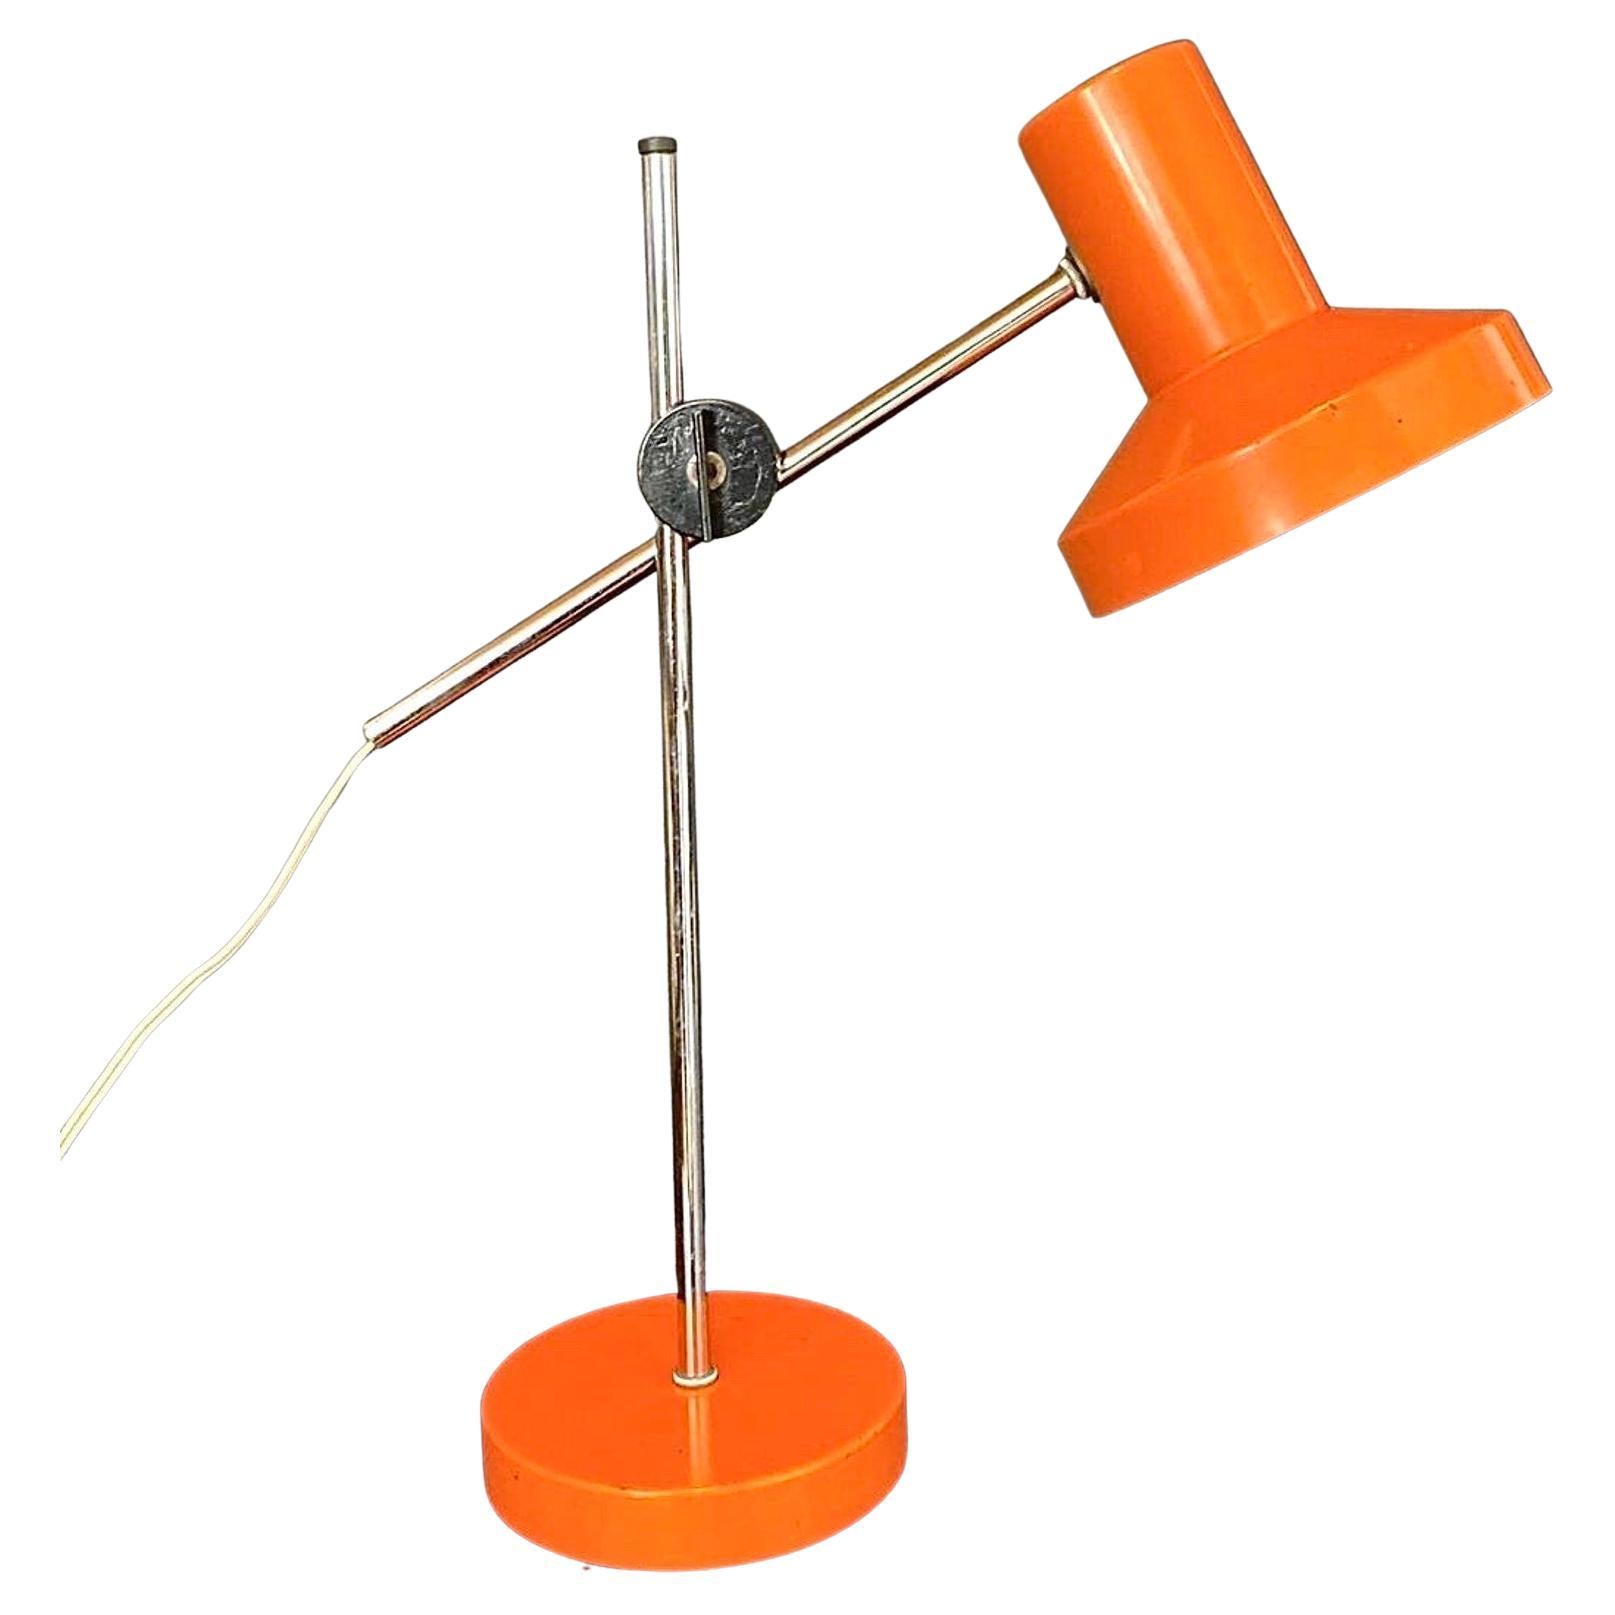 Vintage Tischlampe 50er Jahre Stil Lampe Orange Tischlampe